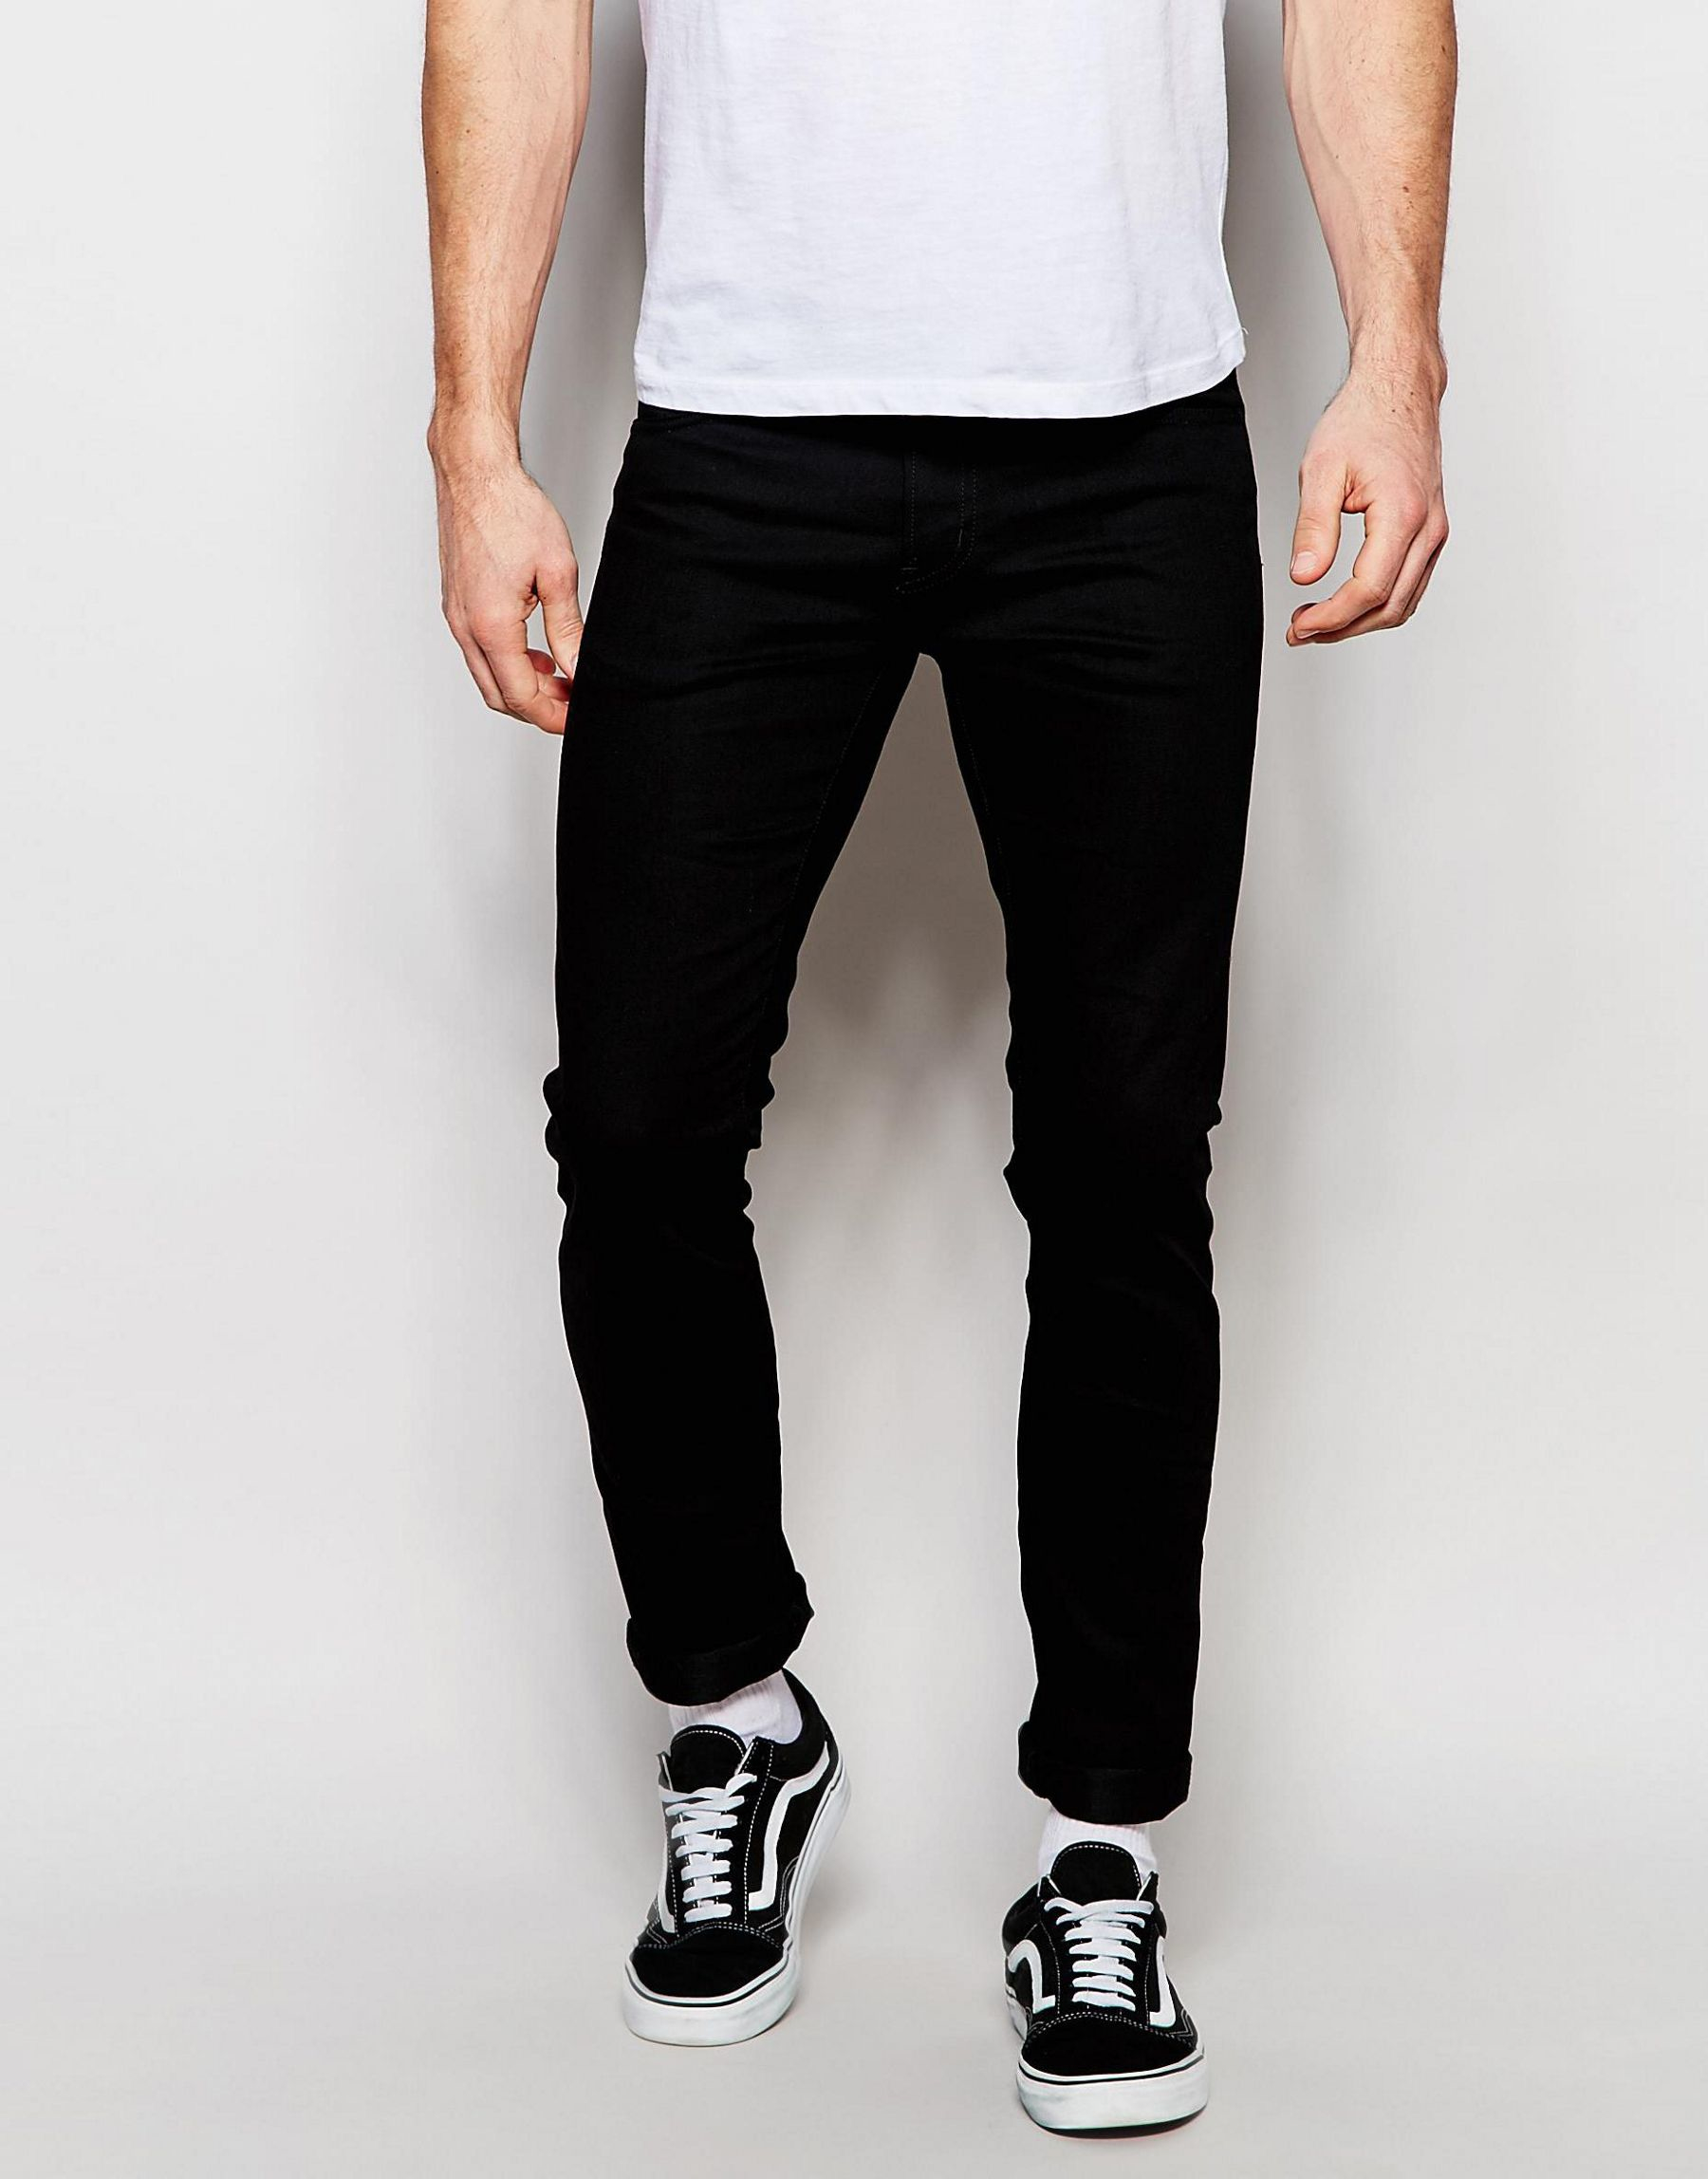 Lyst - Carhartt wip Rebel Slim Jeans in Black for Men